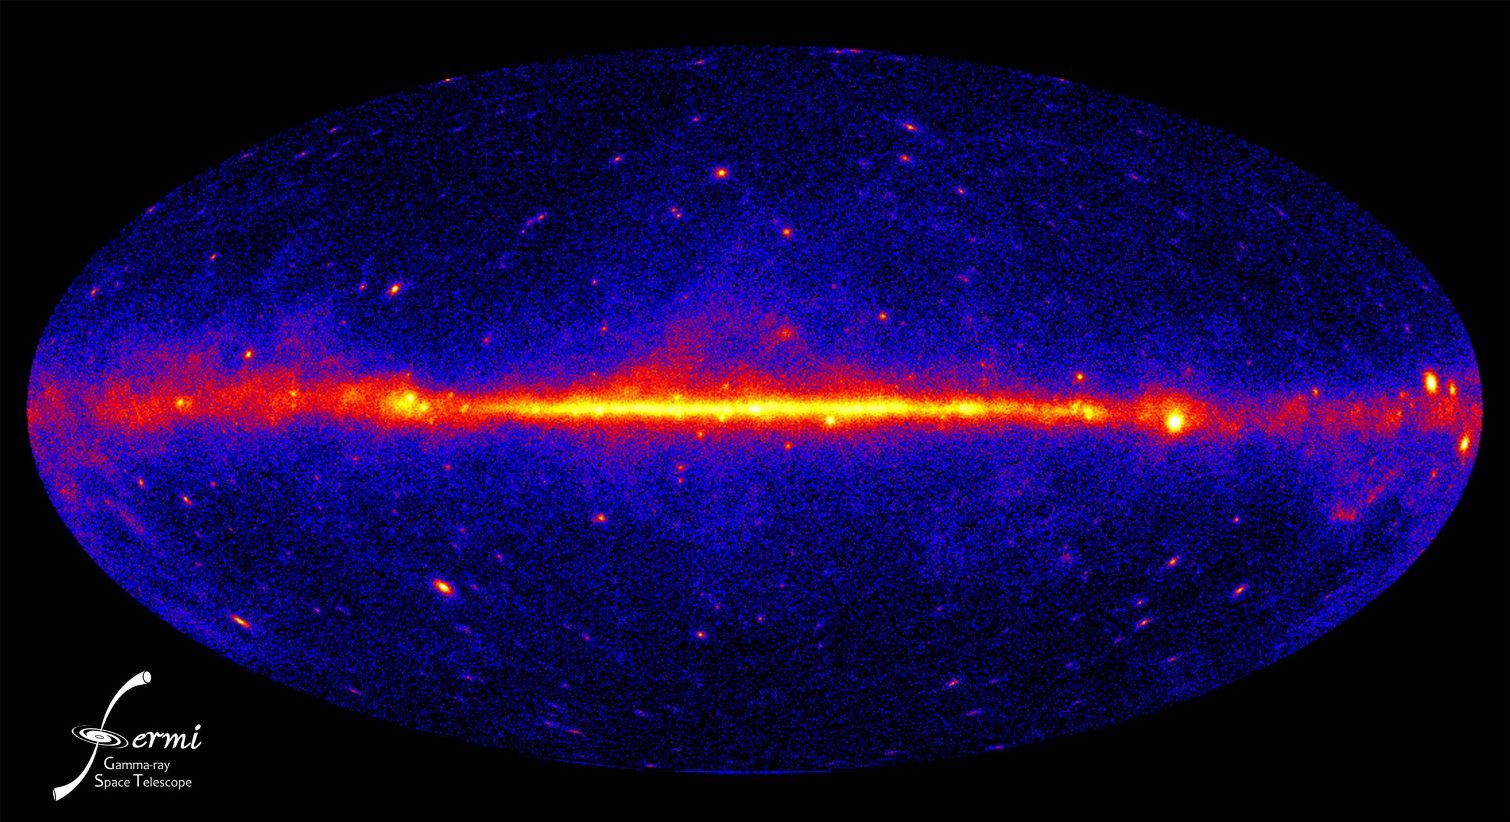 Gama zrake iz središta galaksije. Izvor: NASA/DOE/Fermi LAT Collaboration.